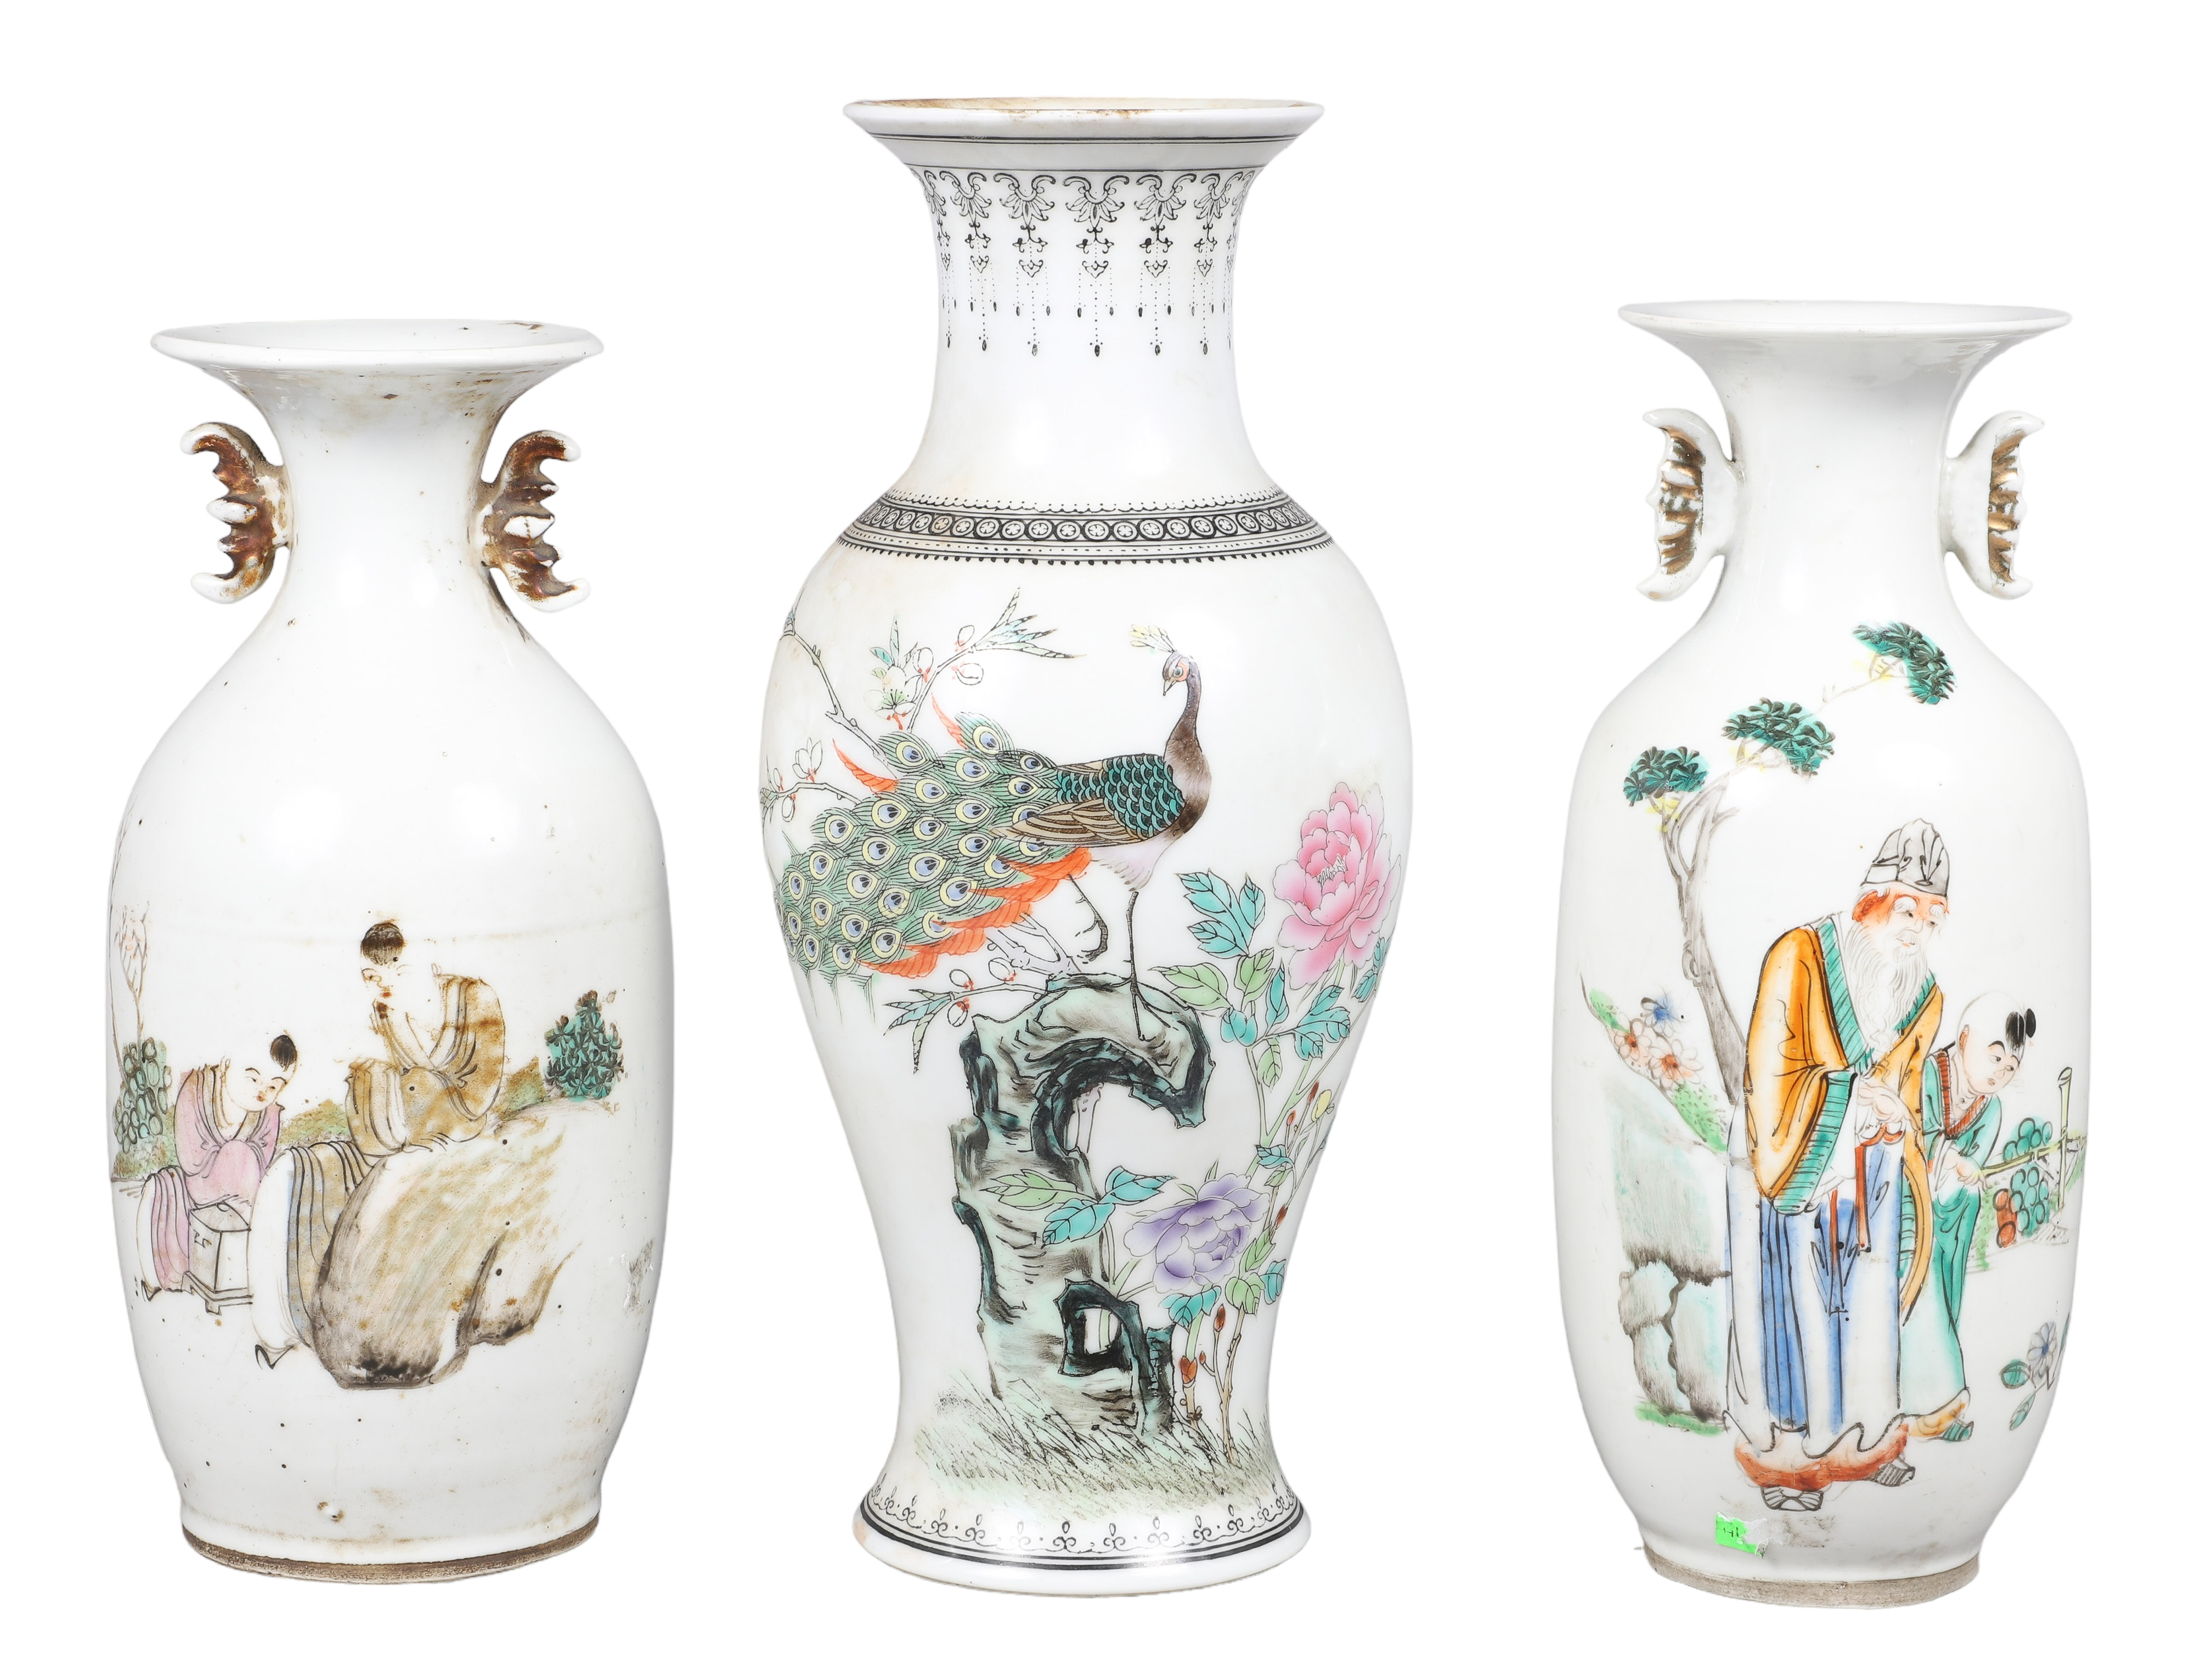  3 Chinese porcelain vases c o 2e1b4c